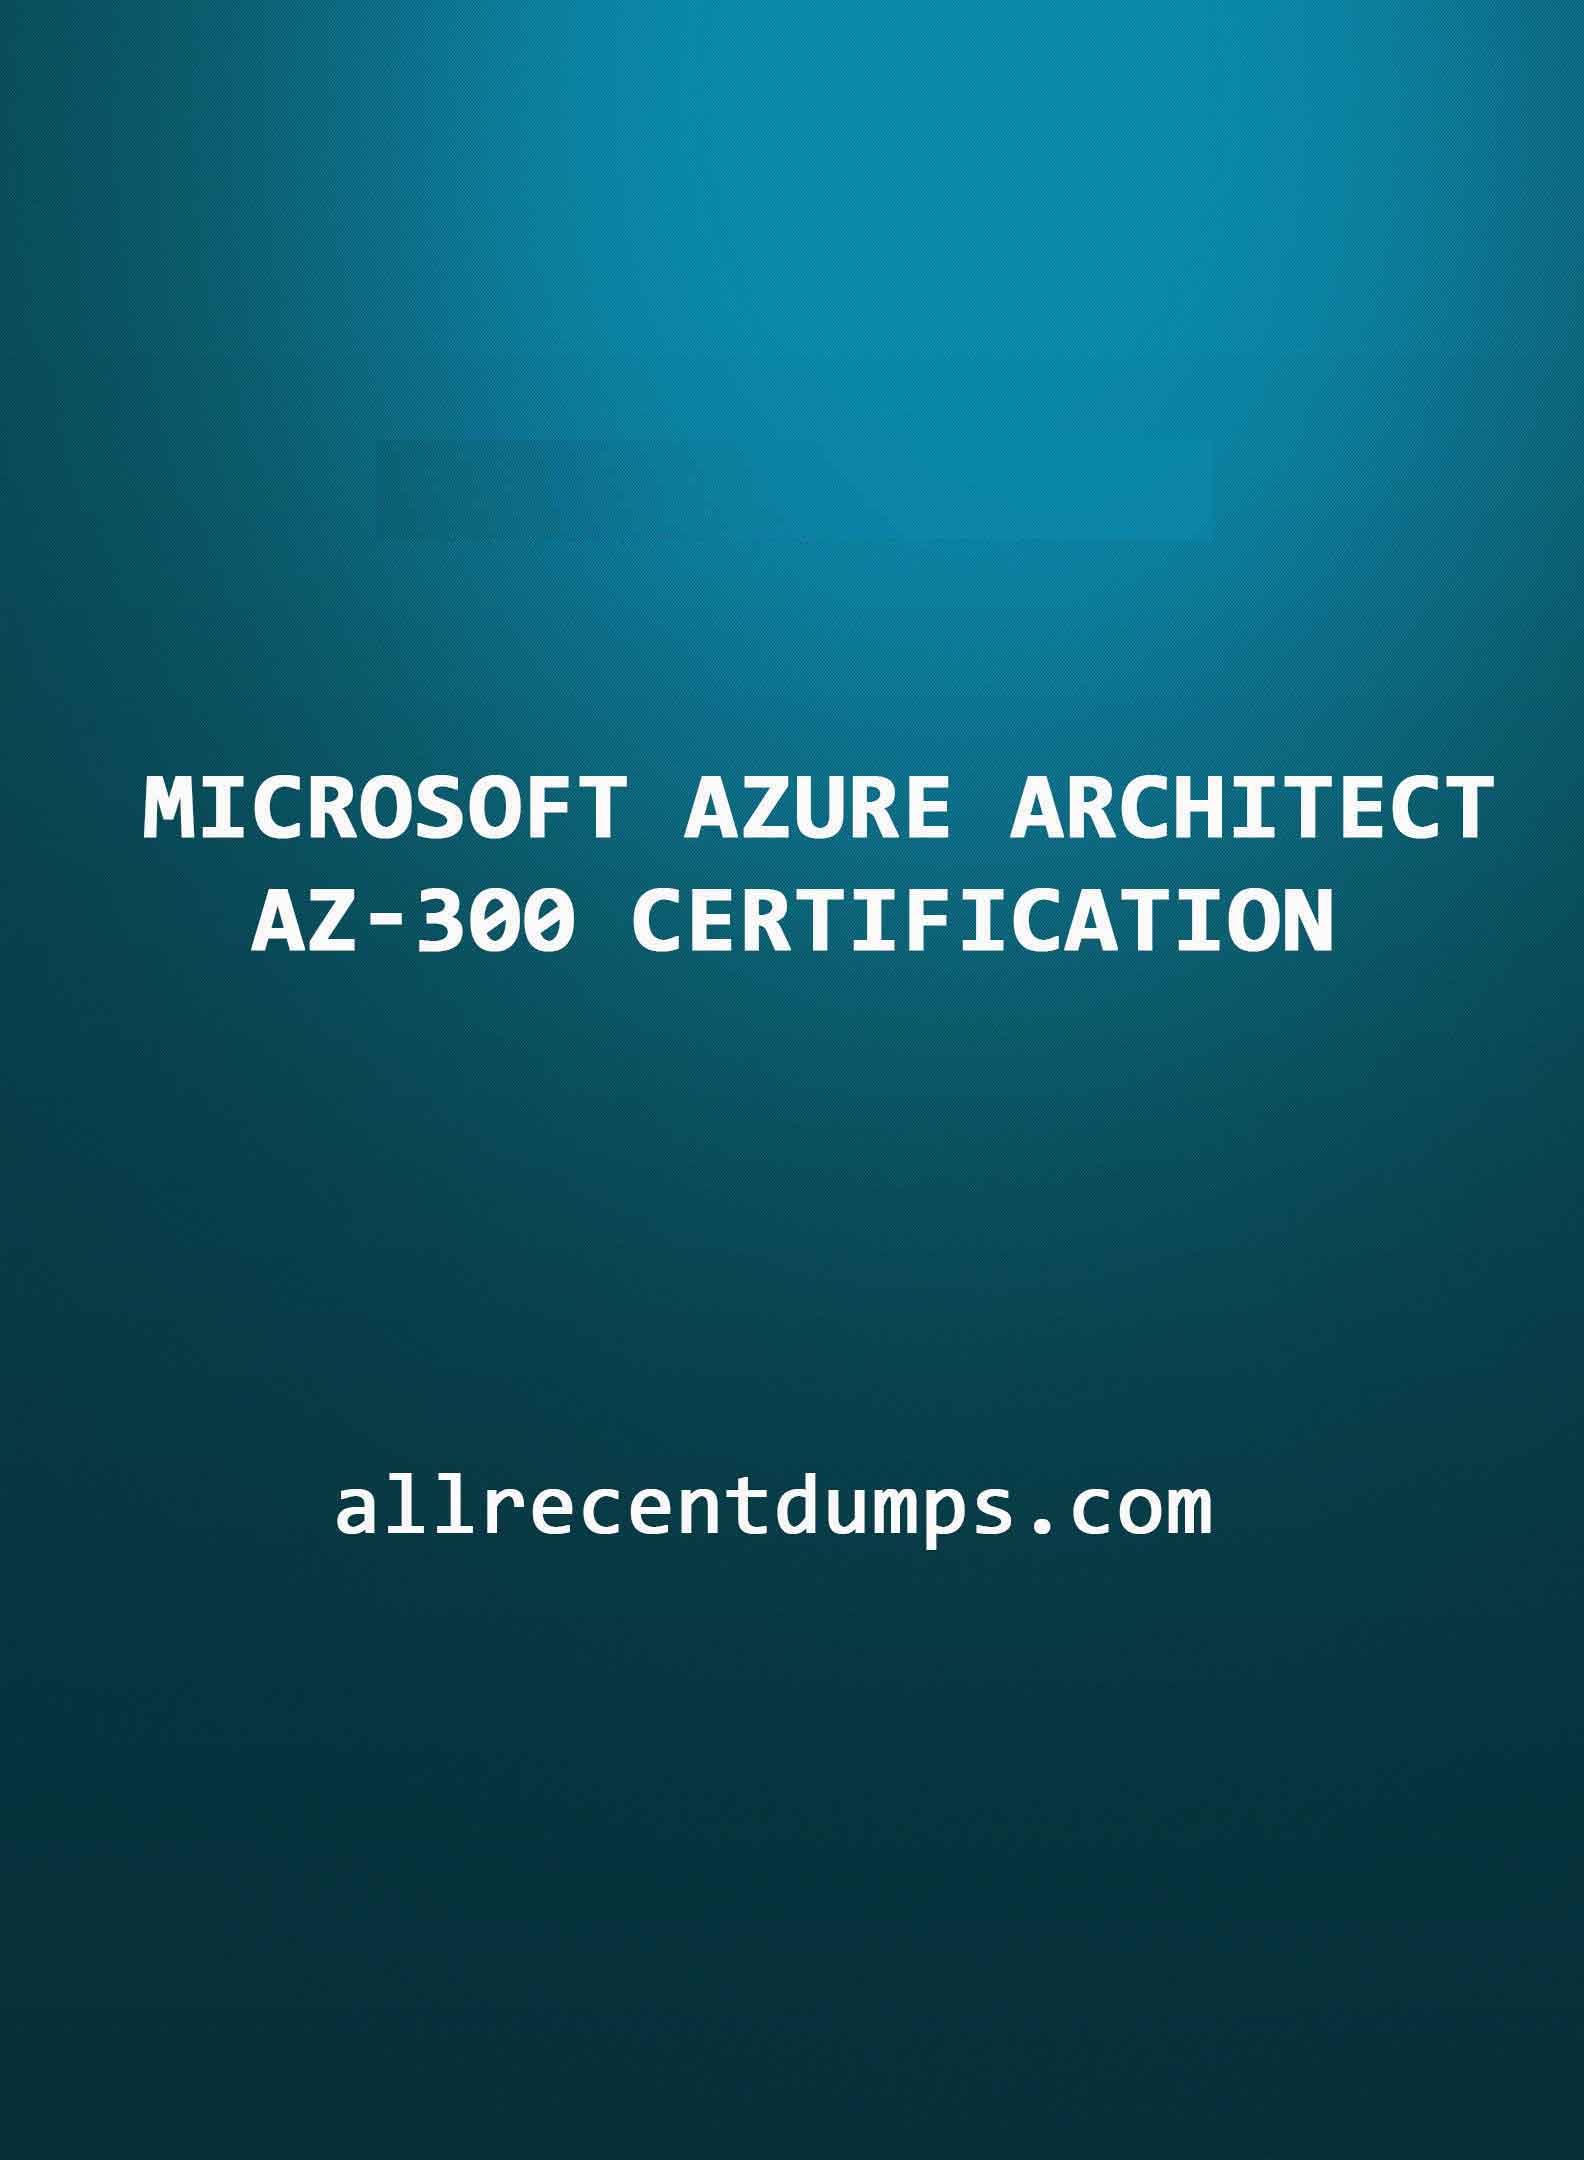 Microsoft Azure Architect AZ-300 certification